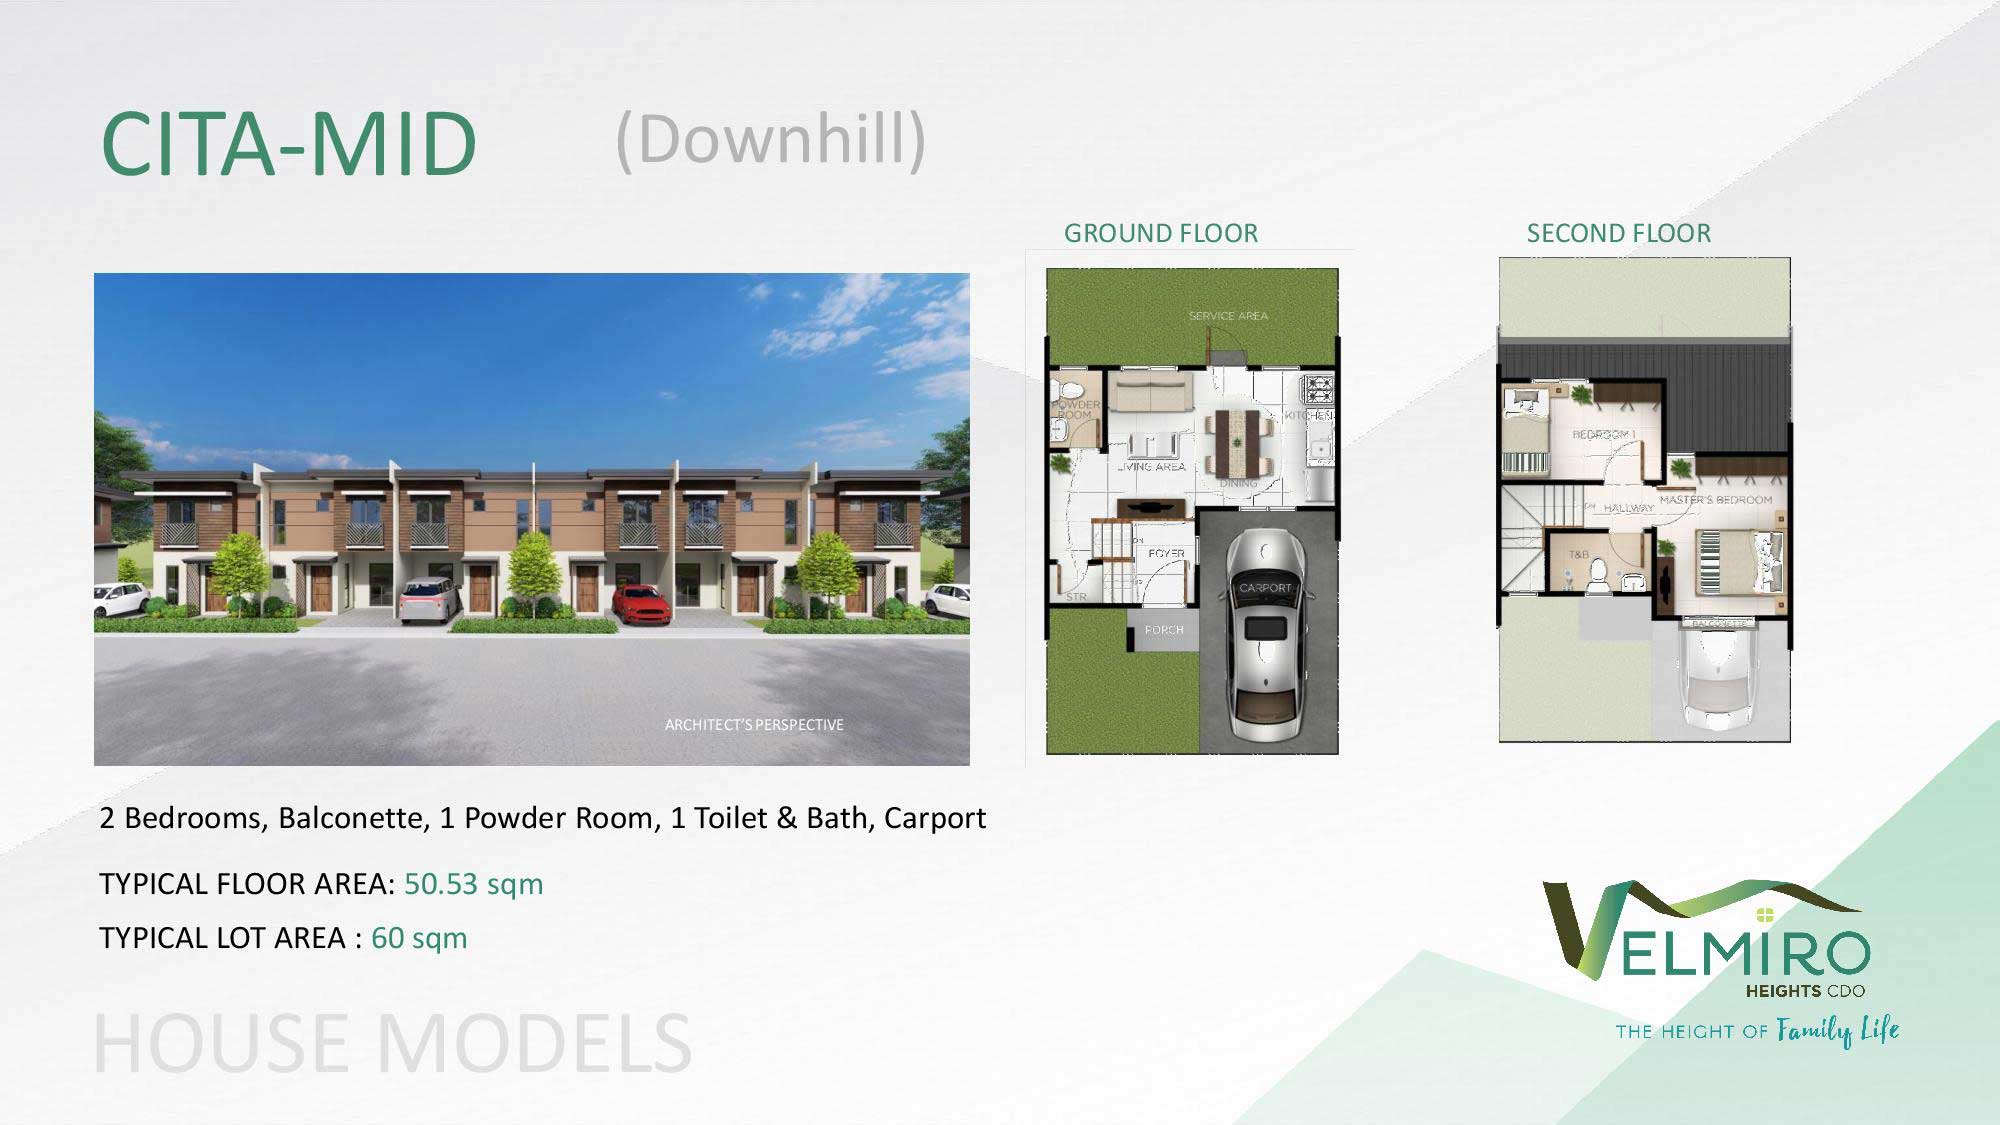 Velmiro Heights Agusan House Model Cita Mid Downhill web GMC